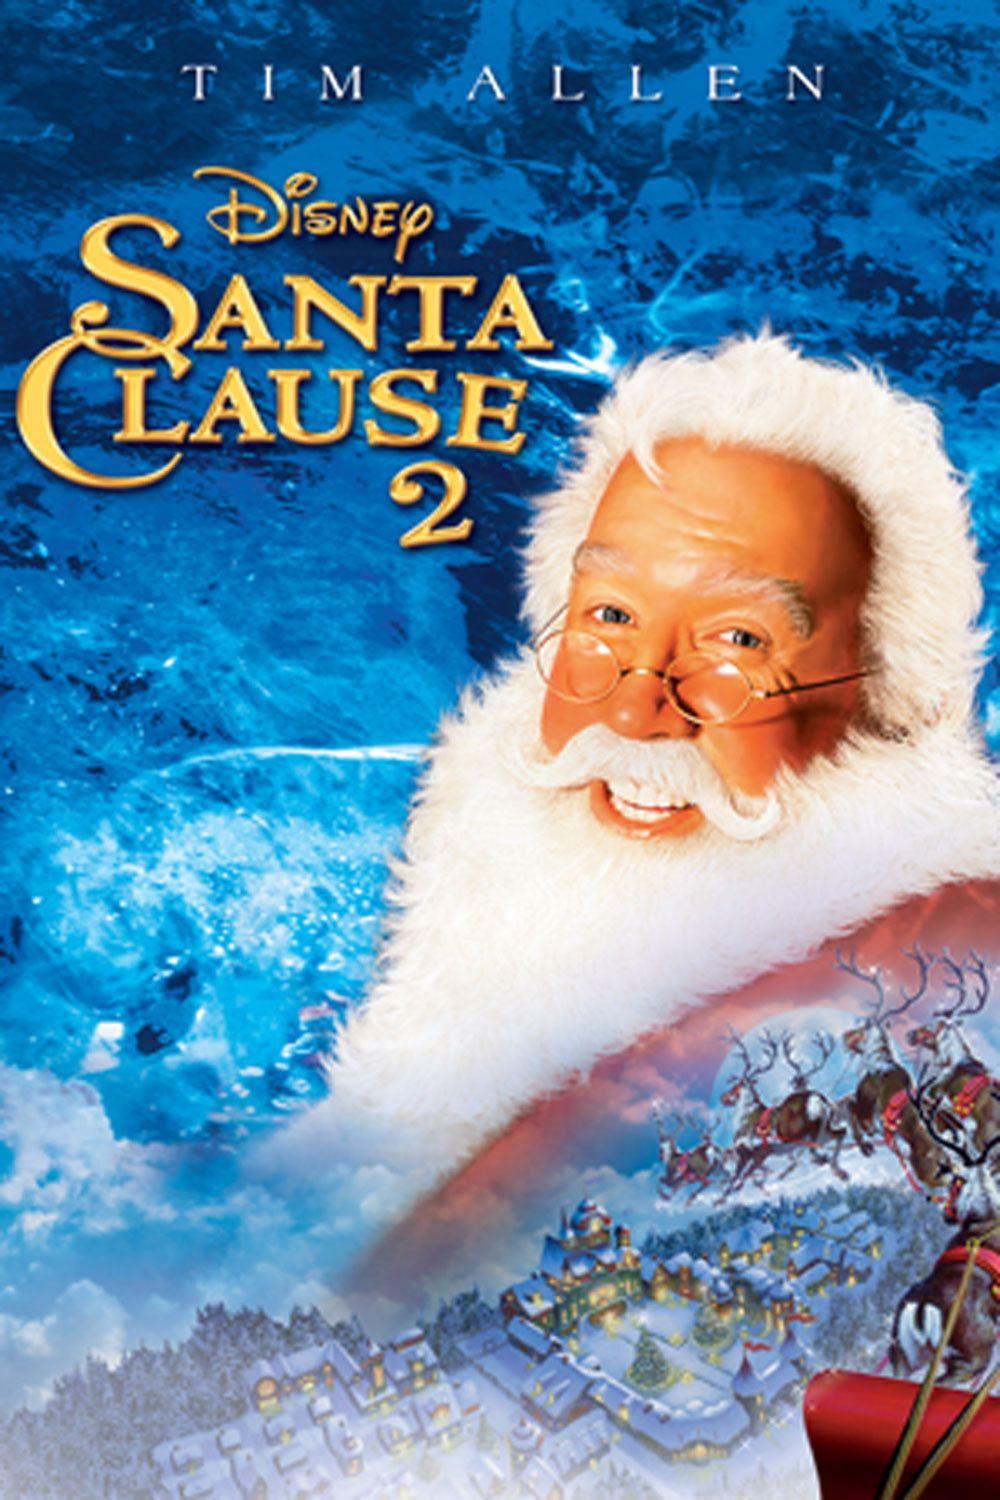 A Look at Disney's Santa Spectacle: The Santa Clause 2. Manic